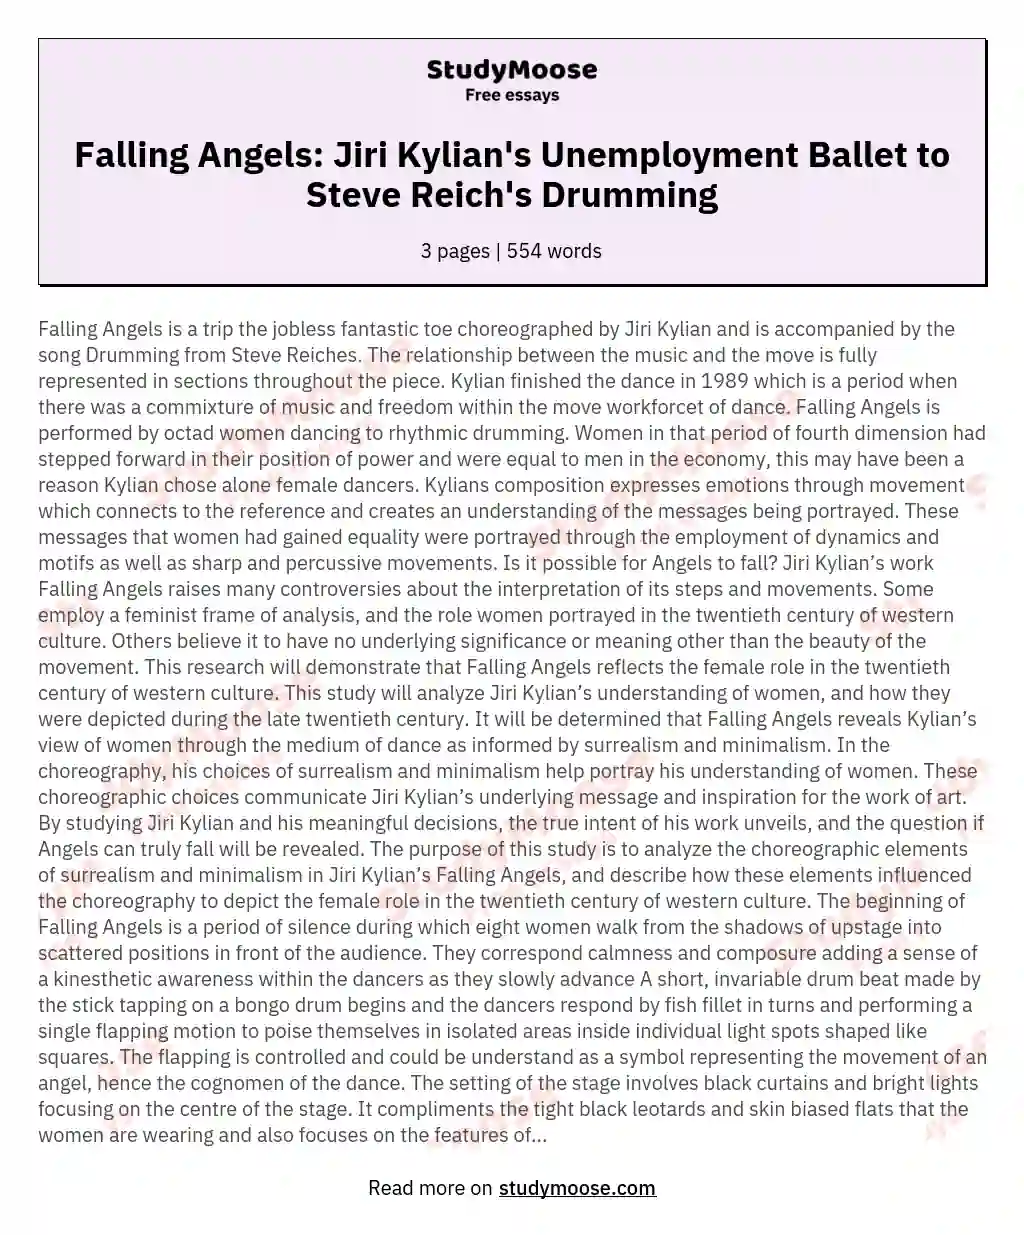 Falling Angels: Jiri Kylian's Unemployment Ballet to Steve Reich's Drumming essay